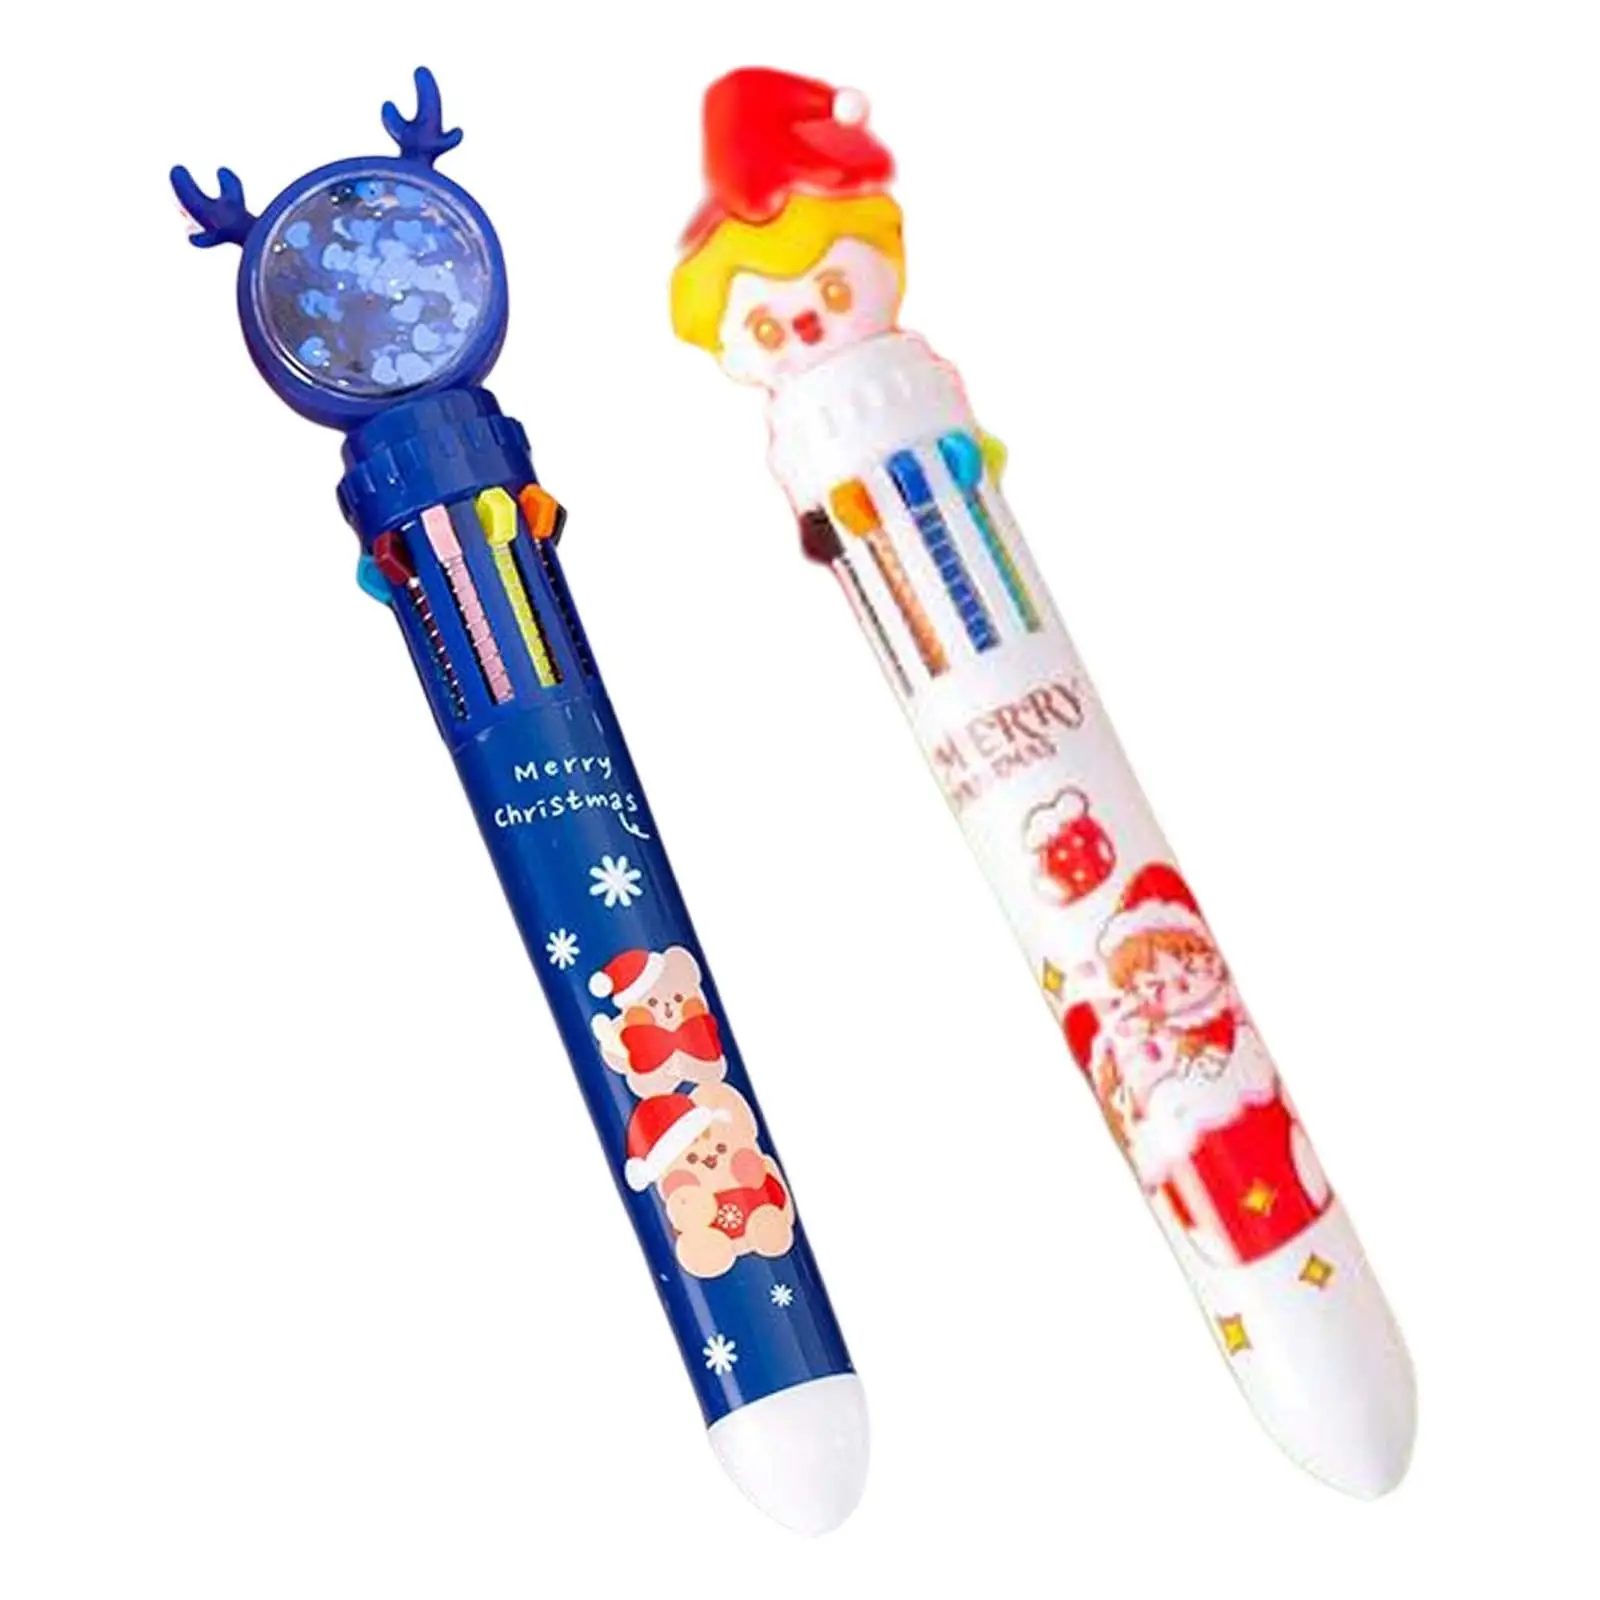 10 Colors Ballpoint Pen Retractable Ballpoint Pen 10 in 1 Multicolor Shuttle Pen 0.5mm for School Office Supplies Children Gift